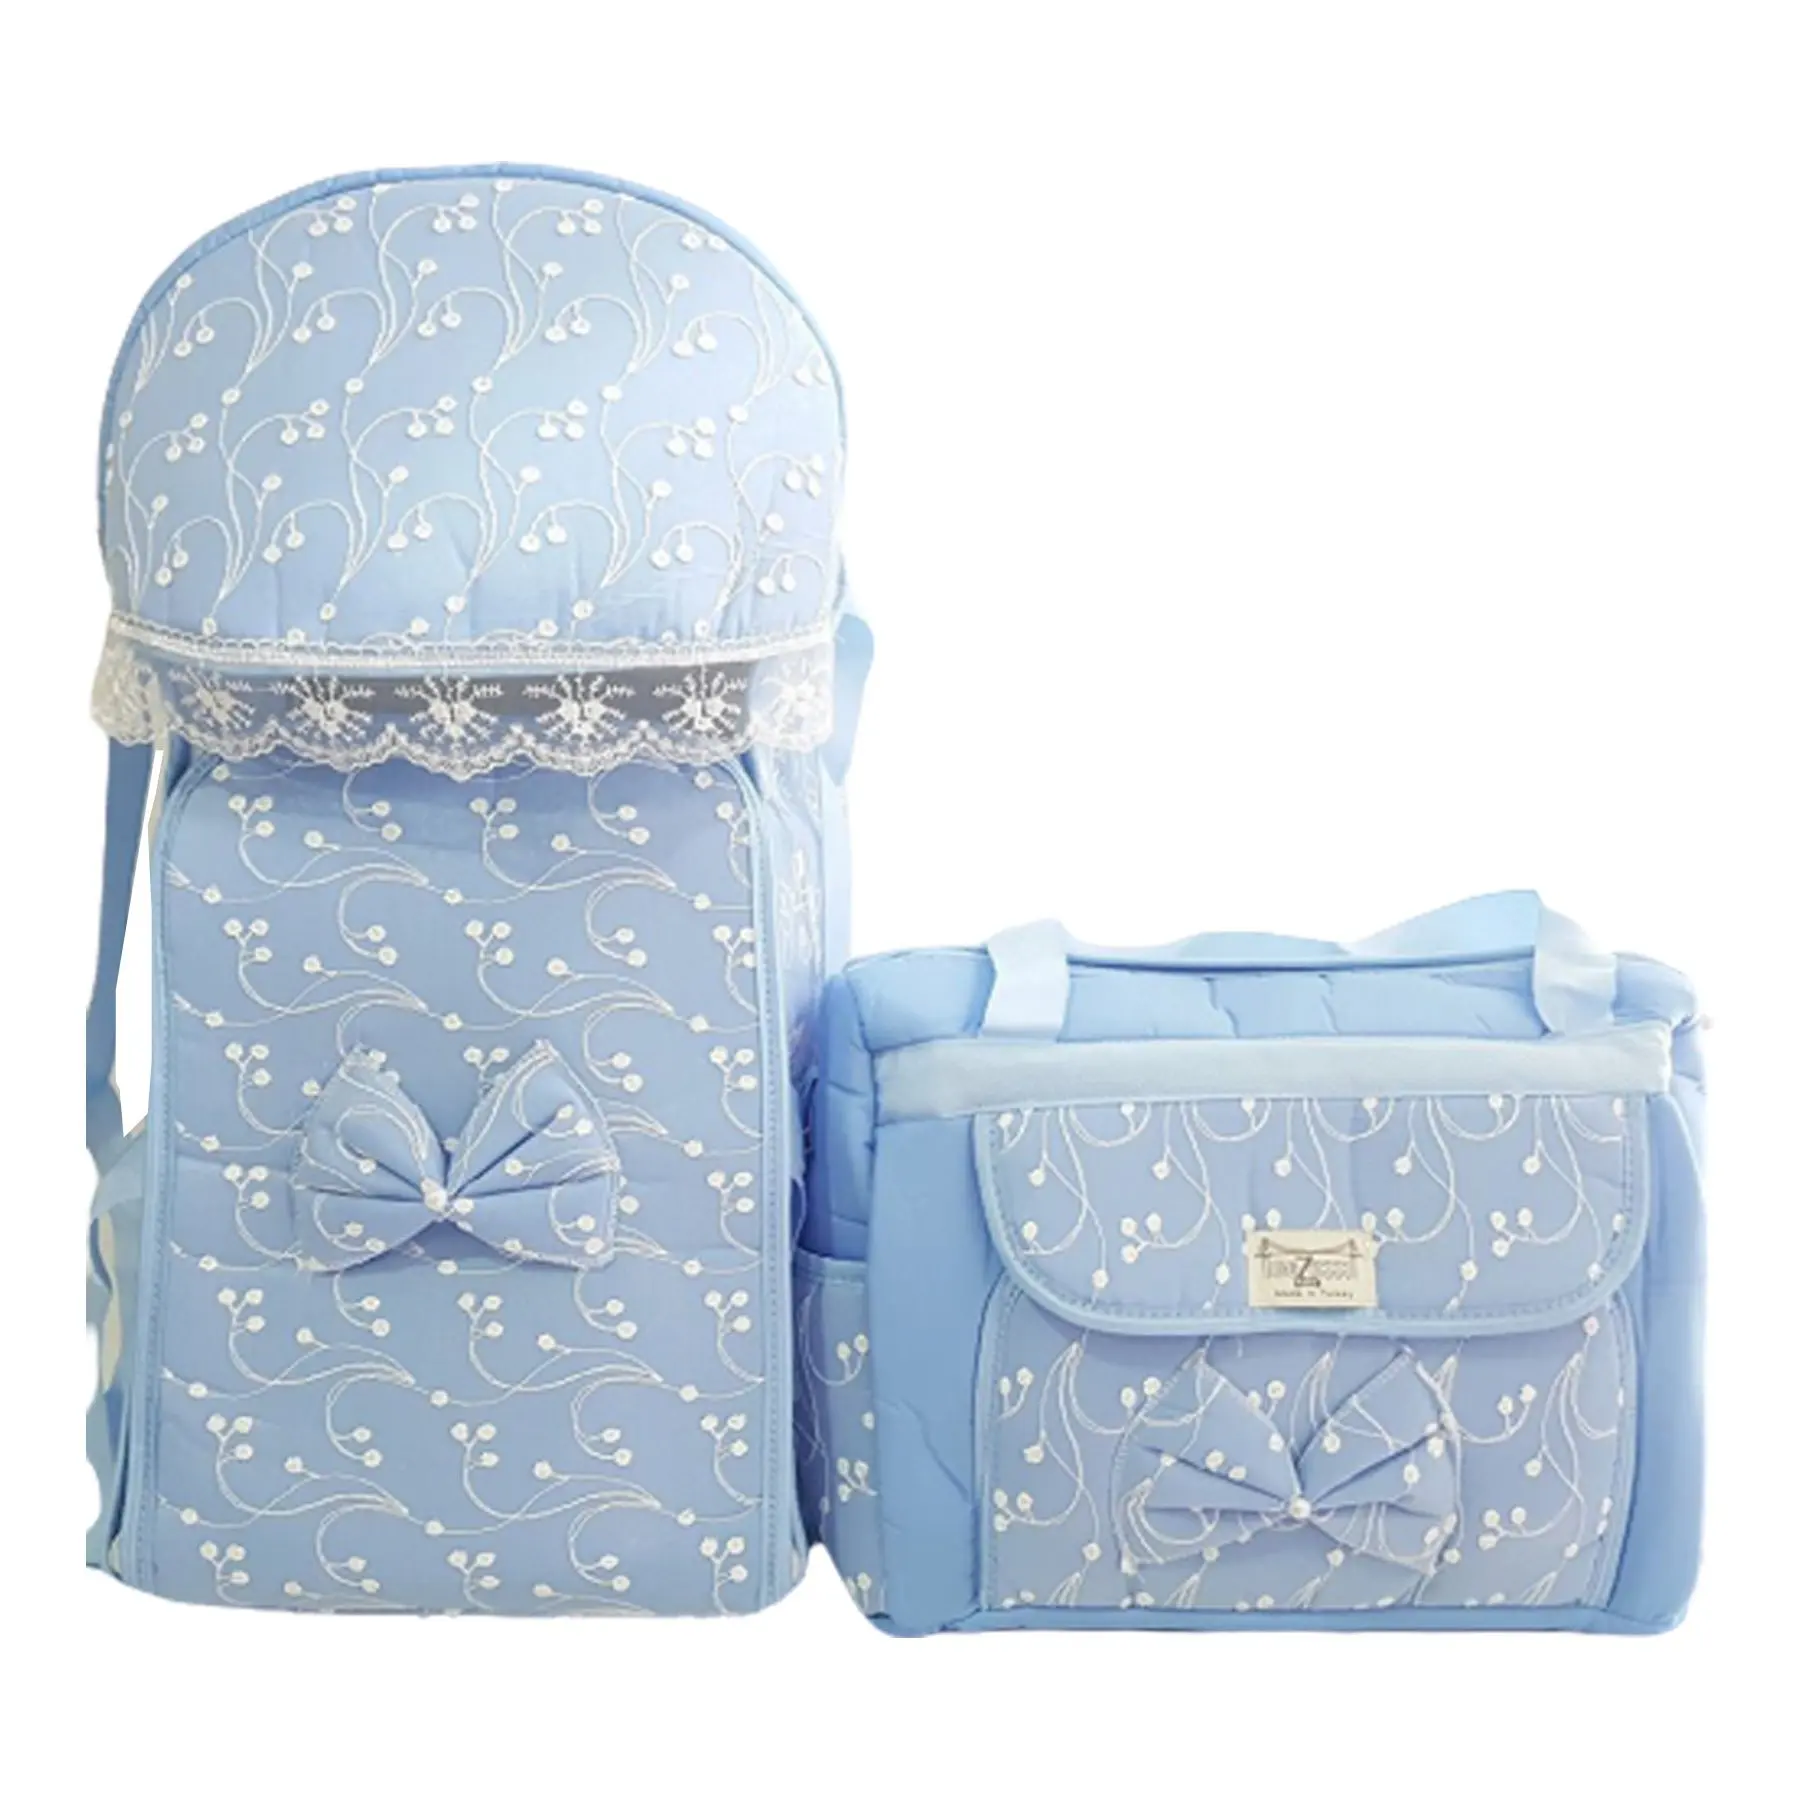 Lace blue luxury 2 pcs baby boy carrying set